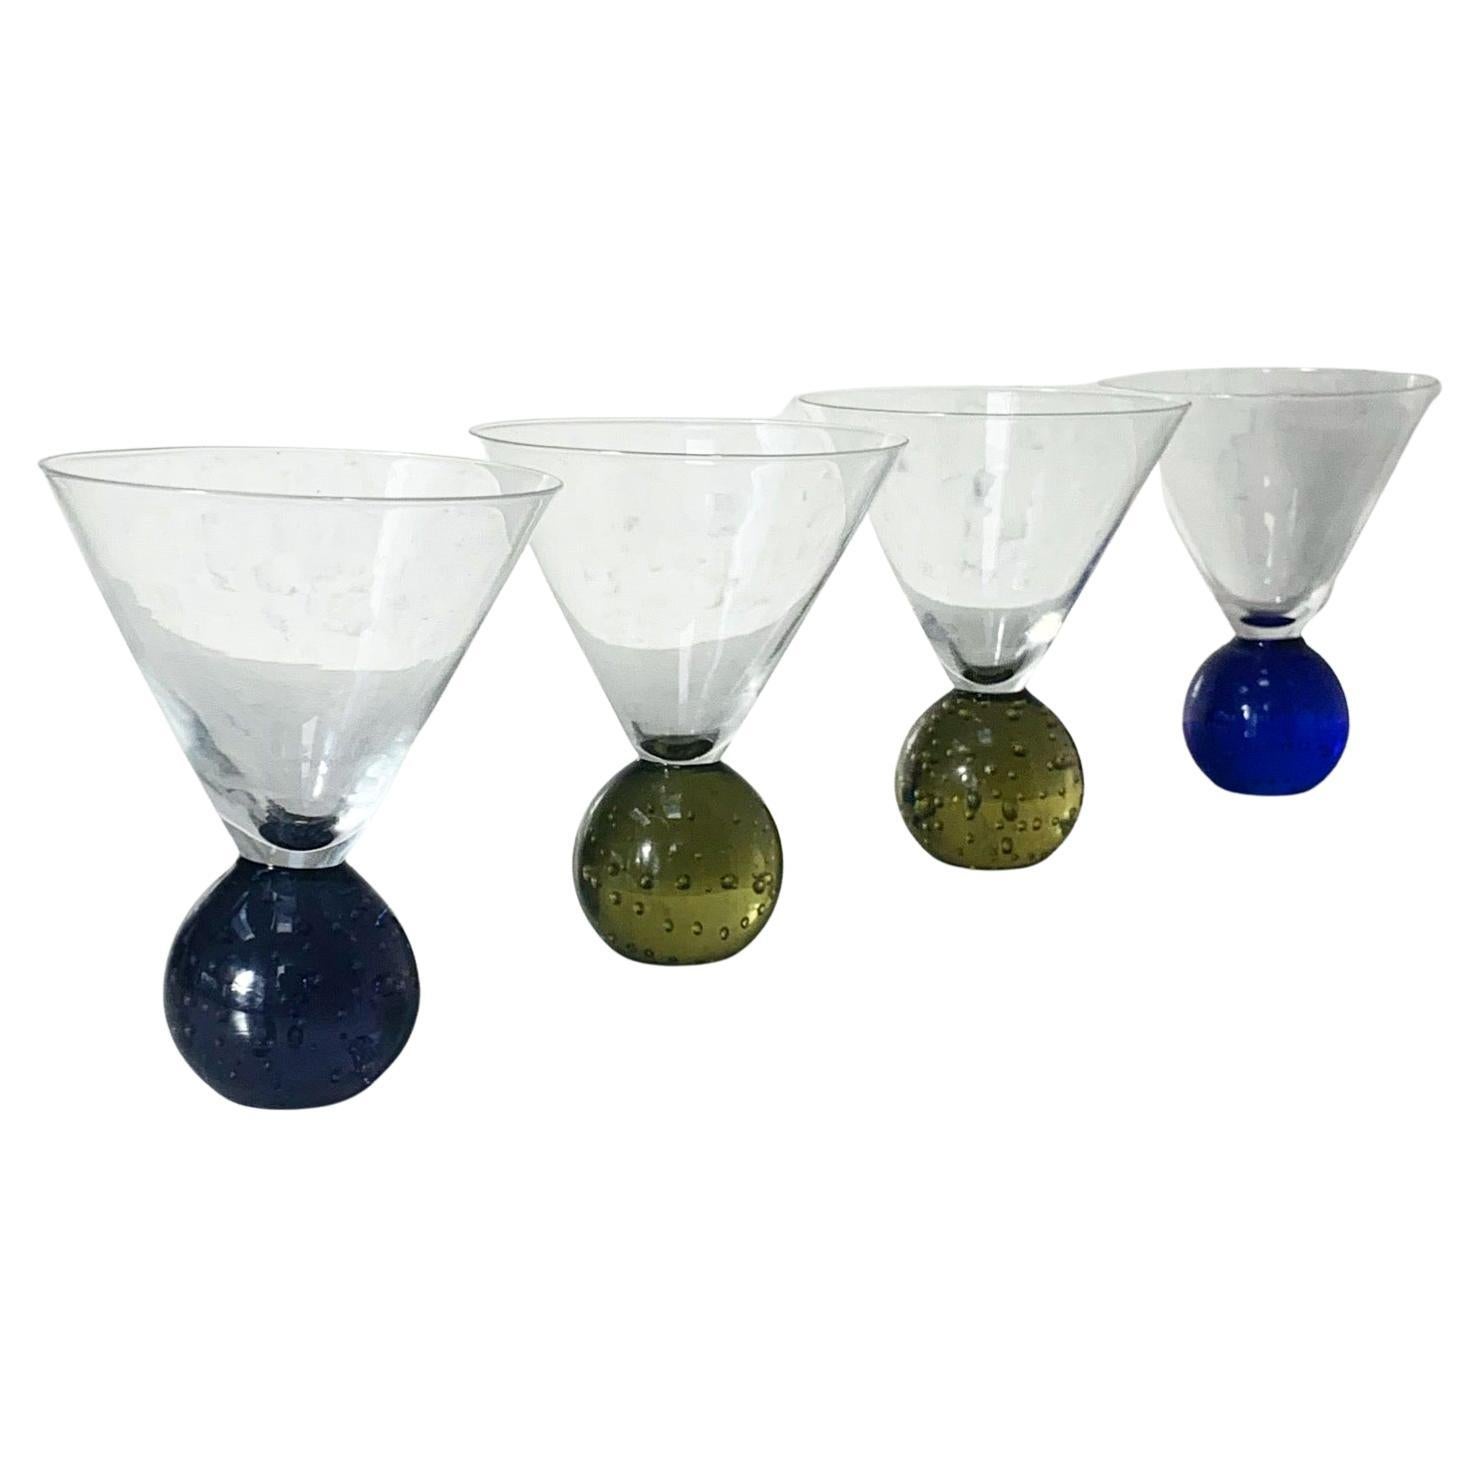 https://a.1stdibscdn.com/postmodern-ball-base-martini-glasses-set-of-4-circa-1990-for-sale/f_60752/f_266237421640022443207/f_26623742_1640022443575_bg_processed.jpg